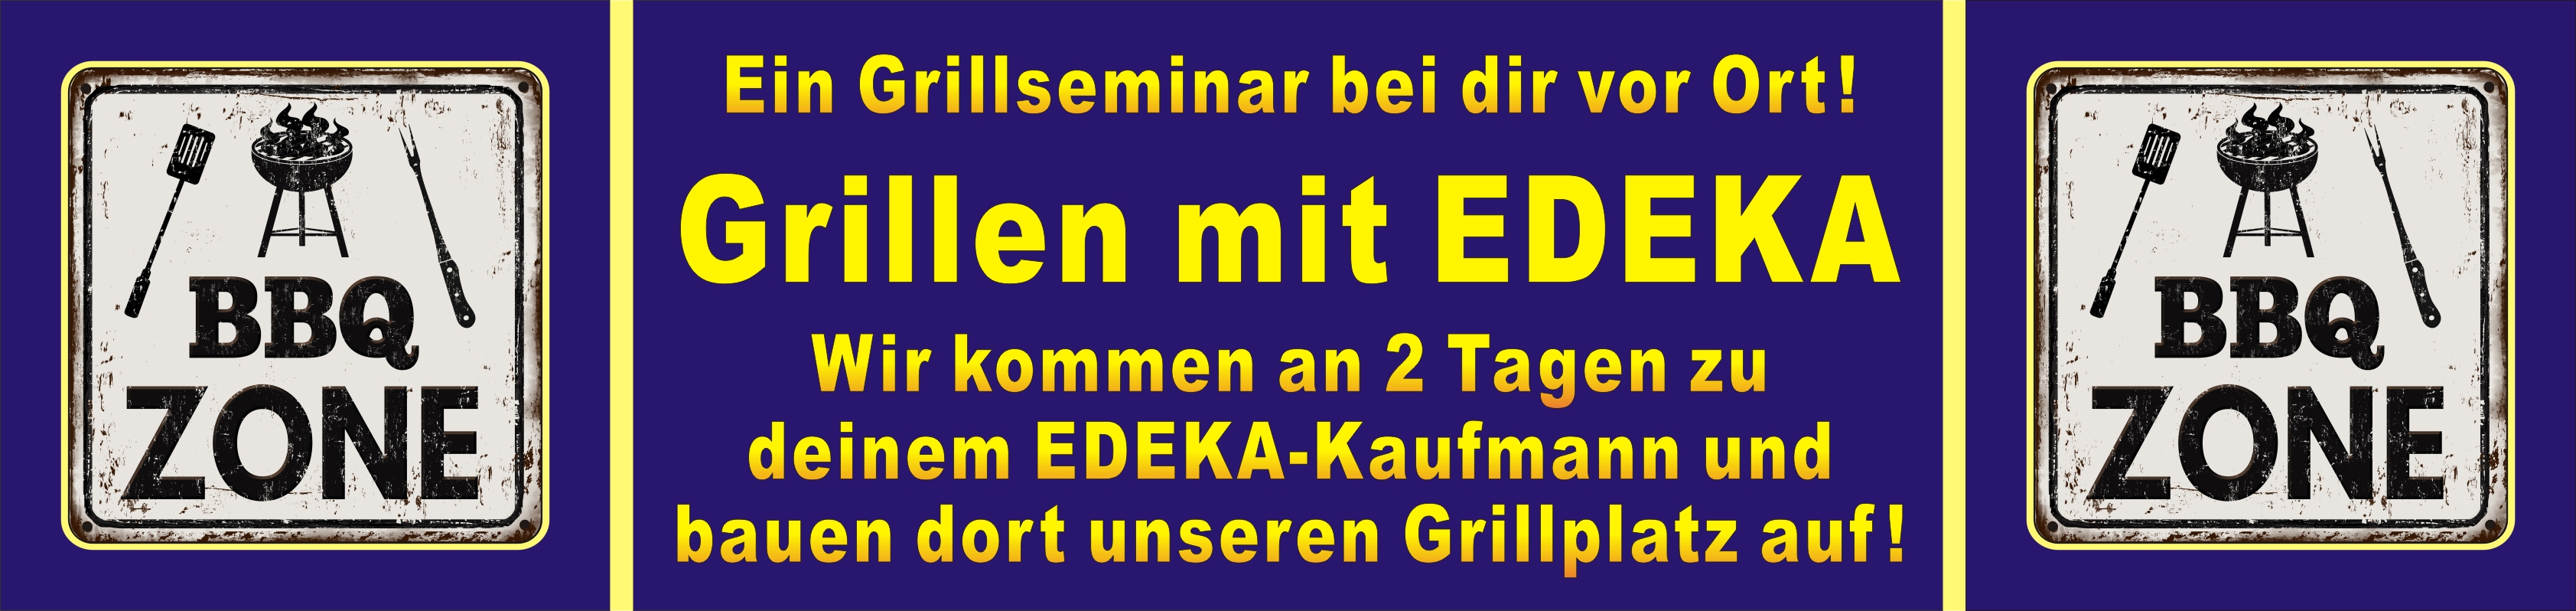 Grillkurs +++ Grillen mit EDEKA +++ Grill-Kochkurs in Osnabrück, Bielefeld, Gütersloh, Paderborn...